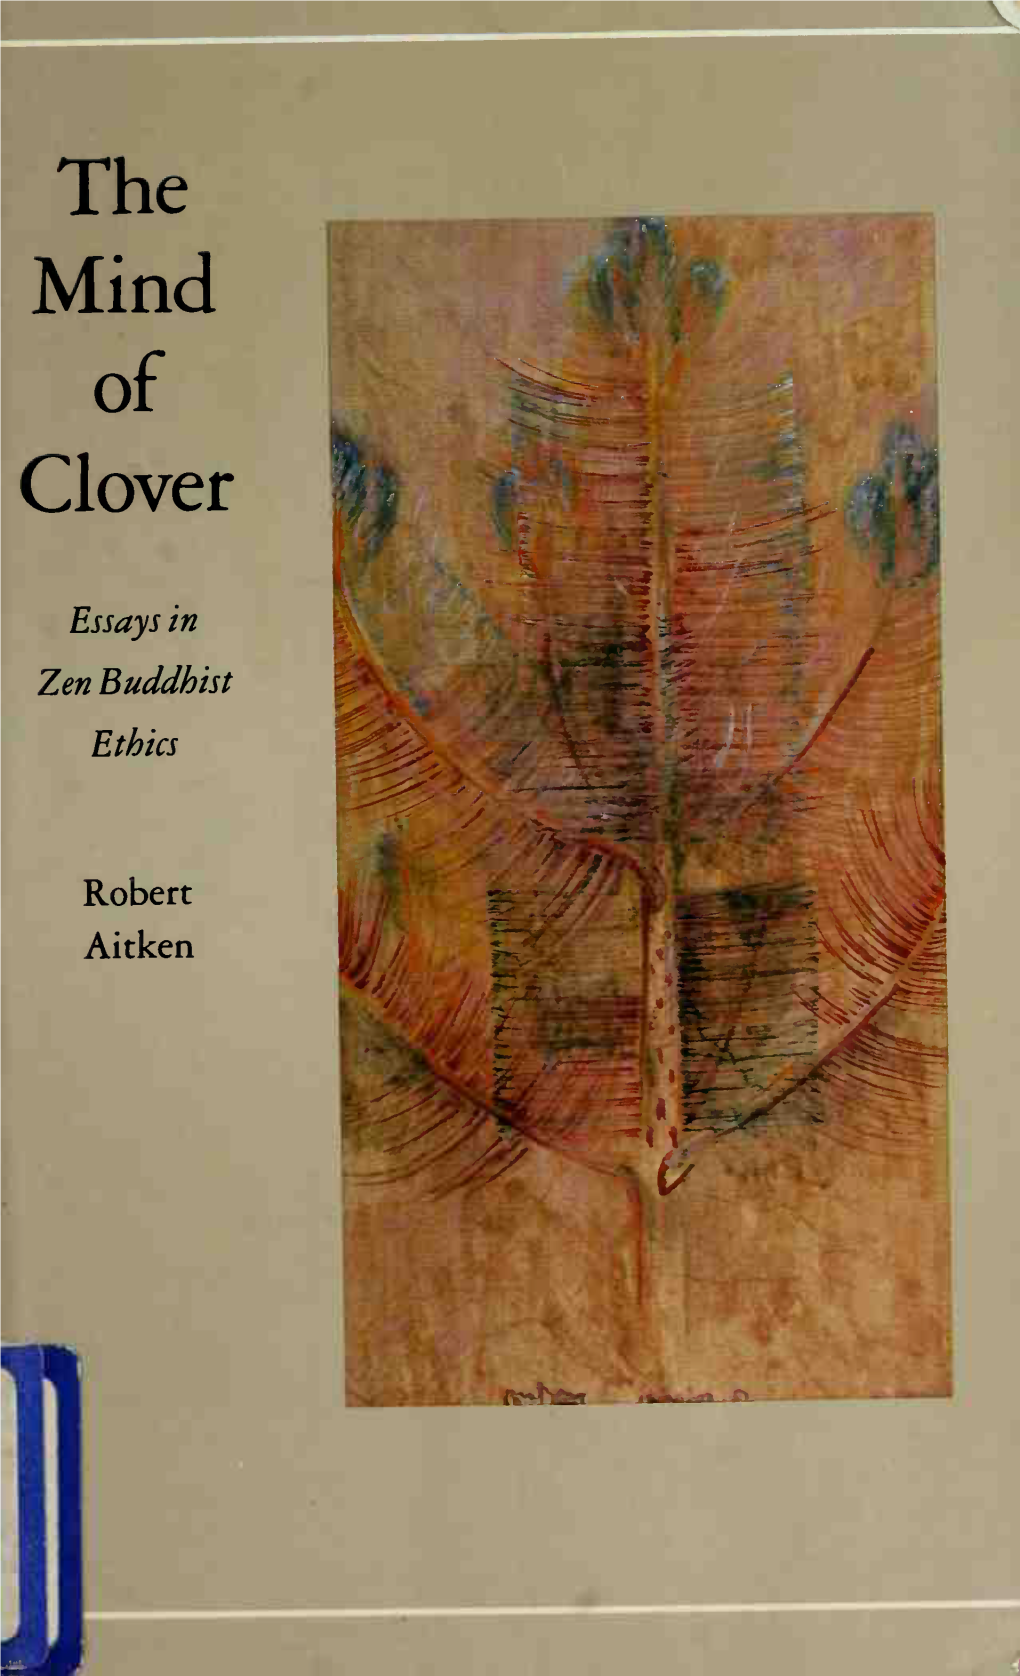 The Mind of Clover : Essays in Zen Buddhist Ethics